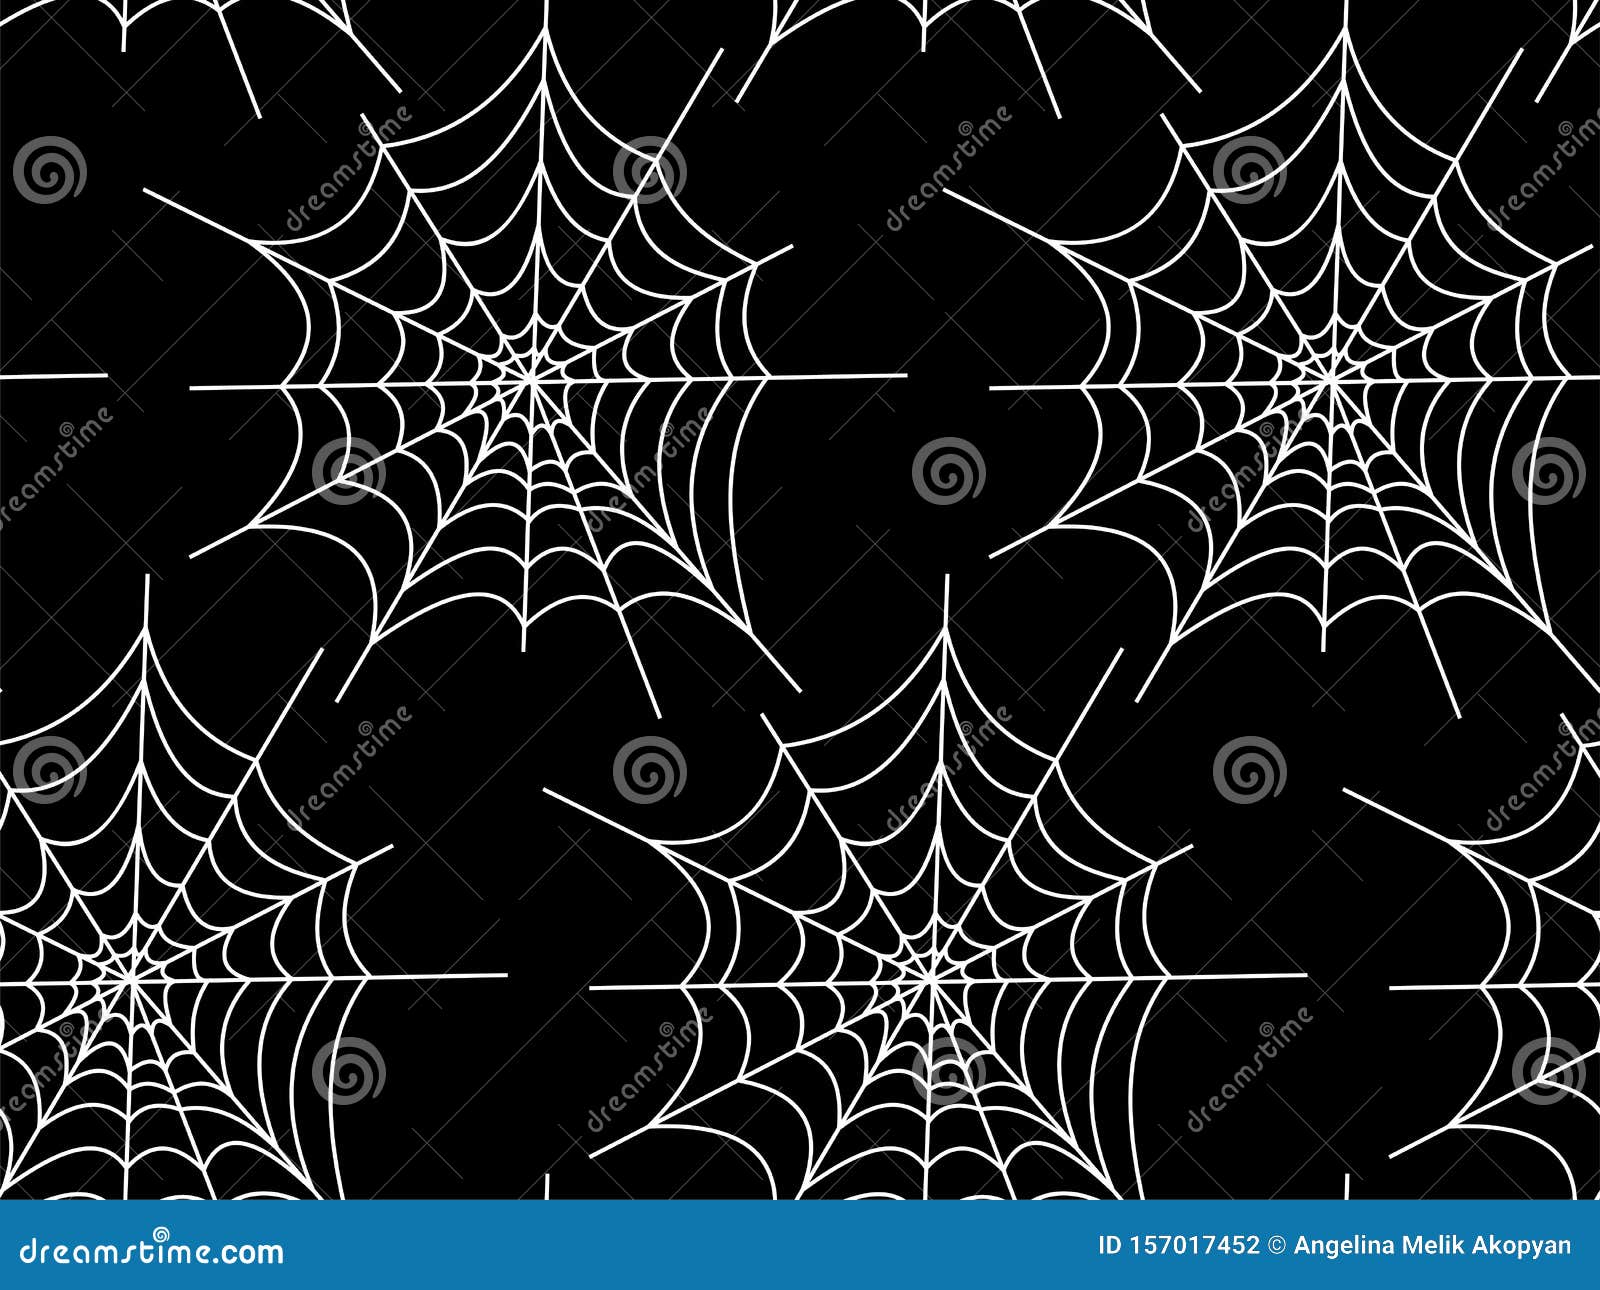 black spiderweb snake Digital Halloween print a4.